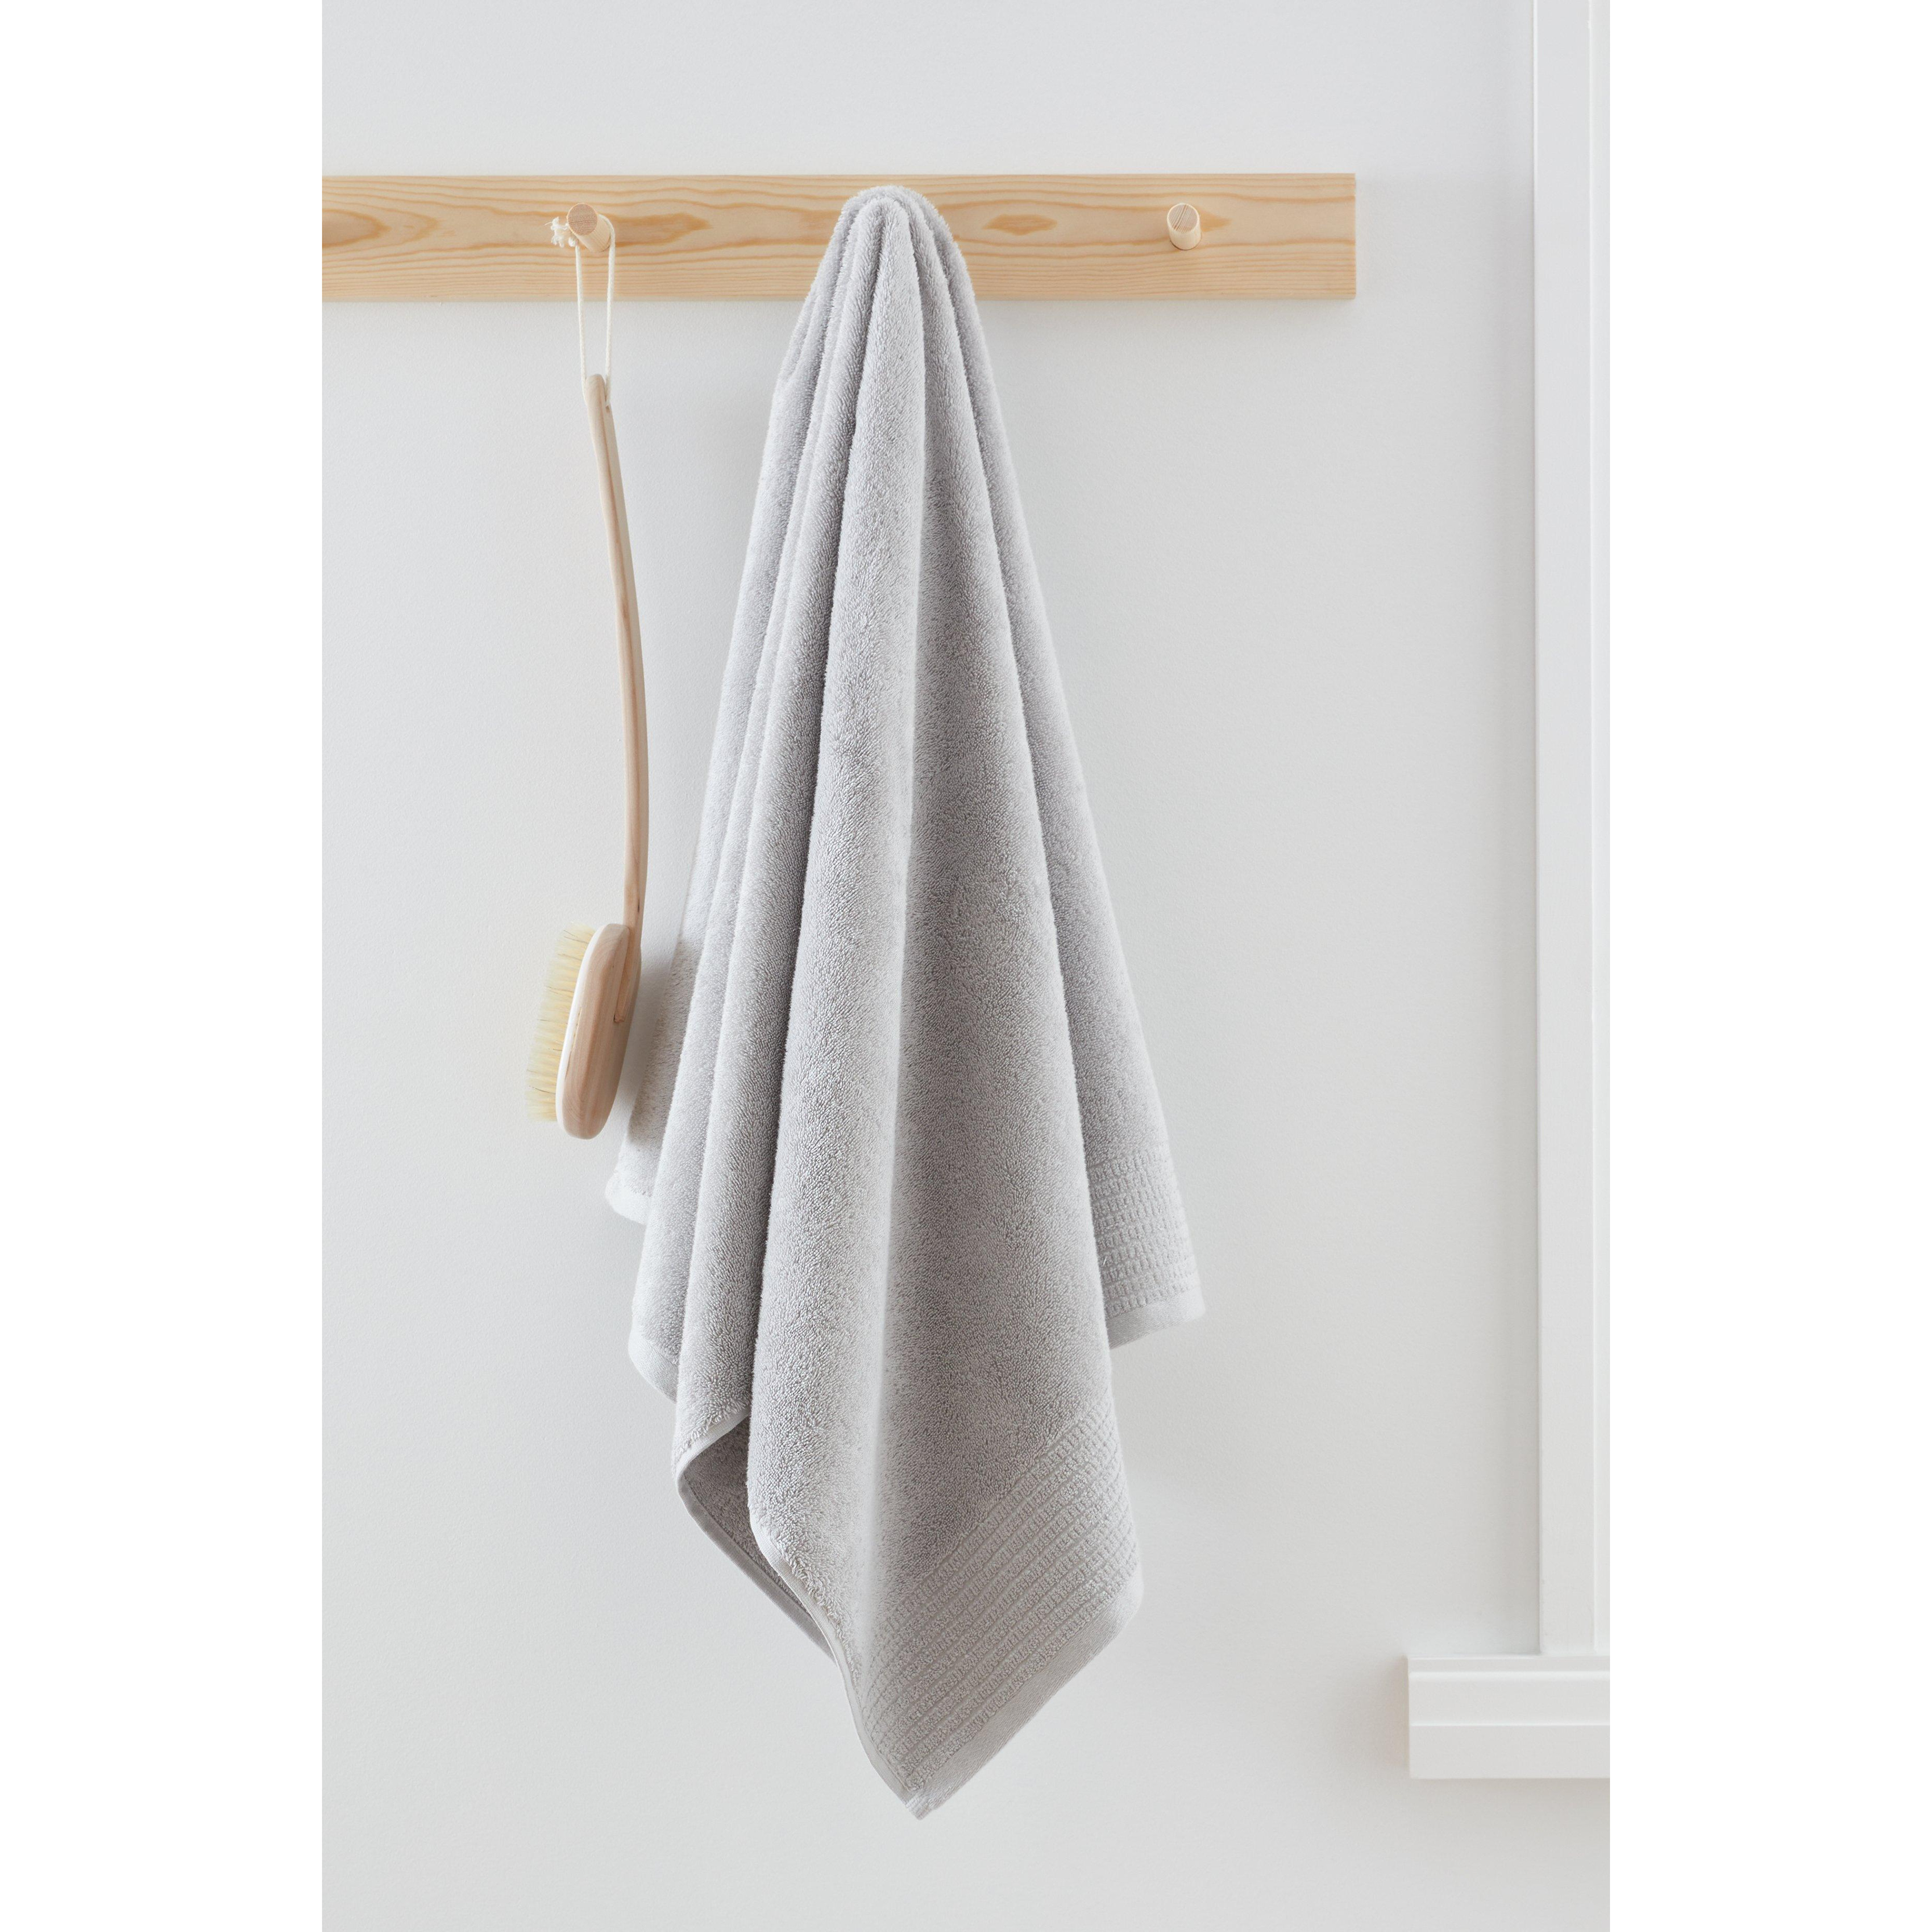 'Egyptian Cotton' Bath Towel - image 1